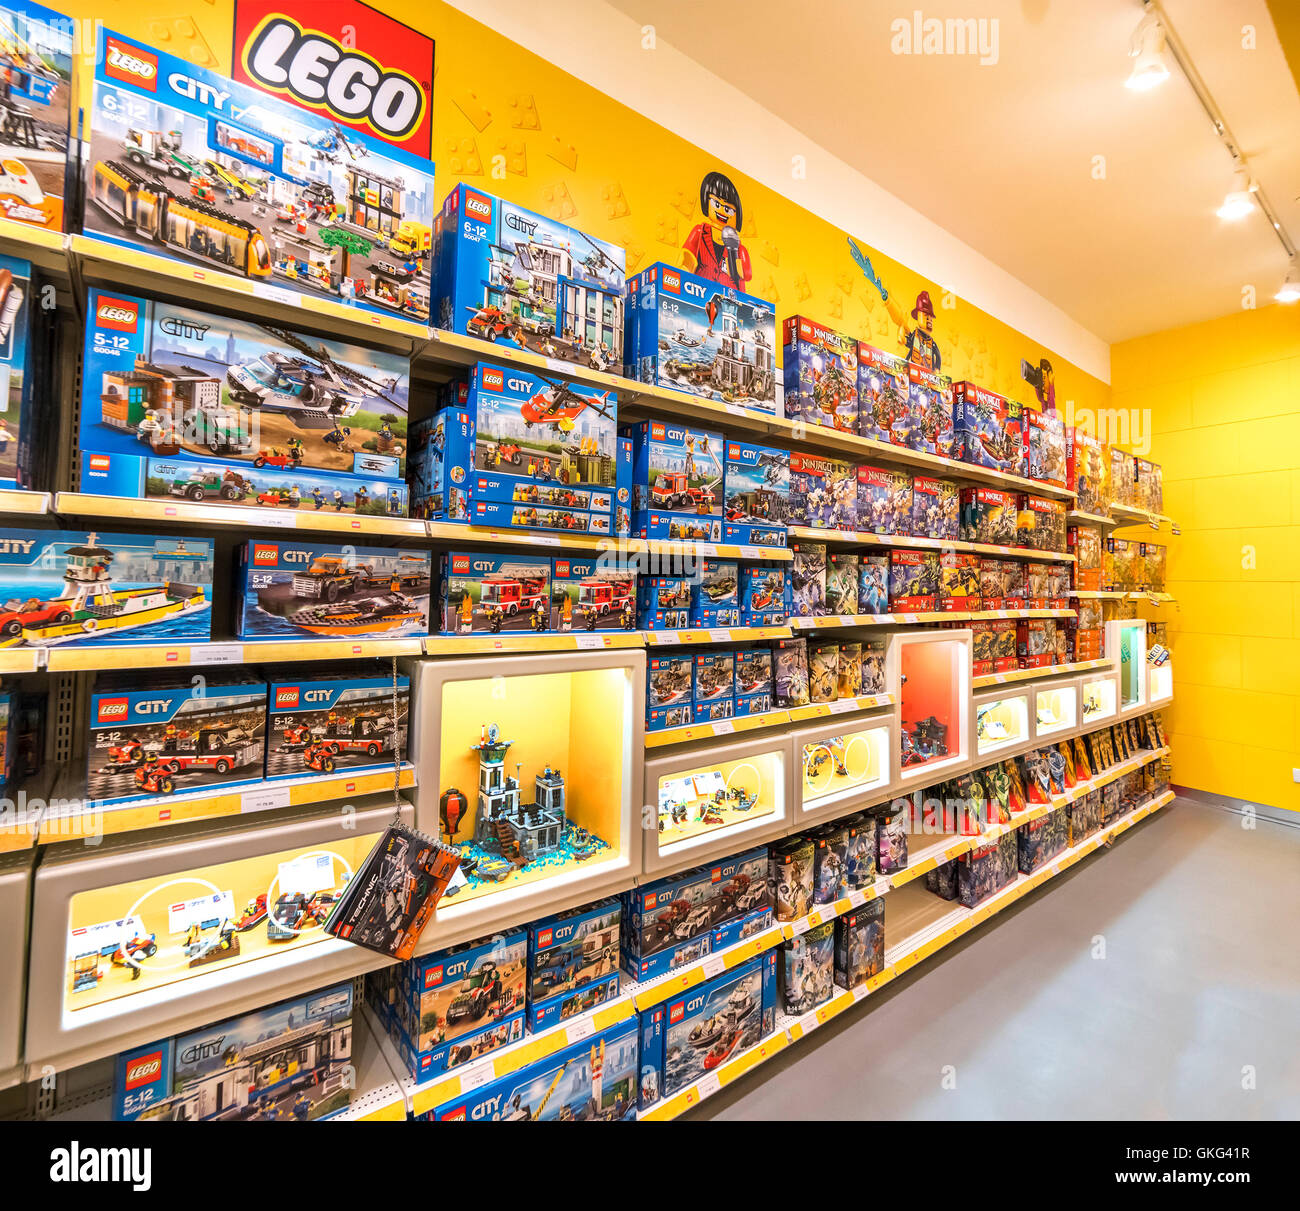 KUALA LUMPUR, MALAYSIA - MAY 30, 2016: LEGO Shop at the Setia City Stock Photo - Alamy